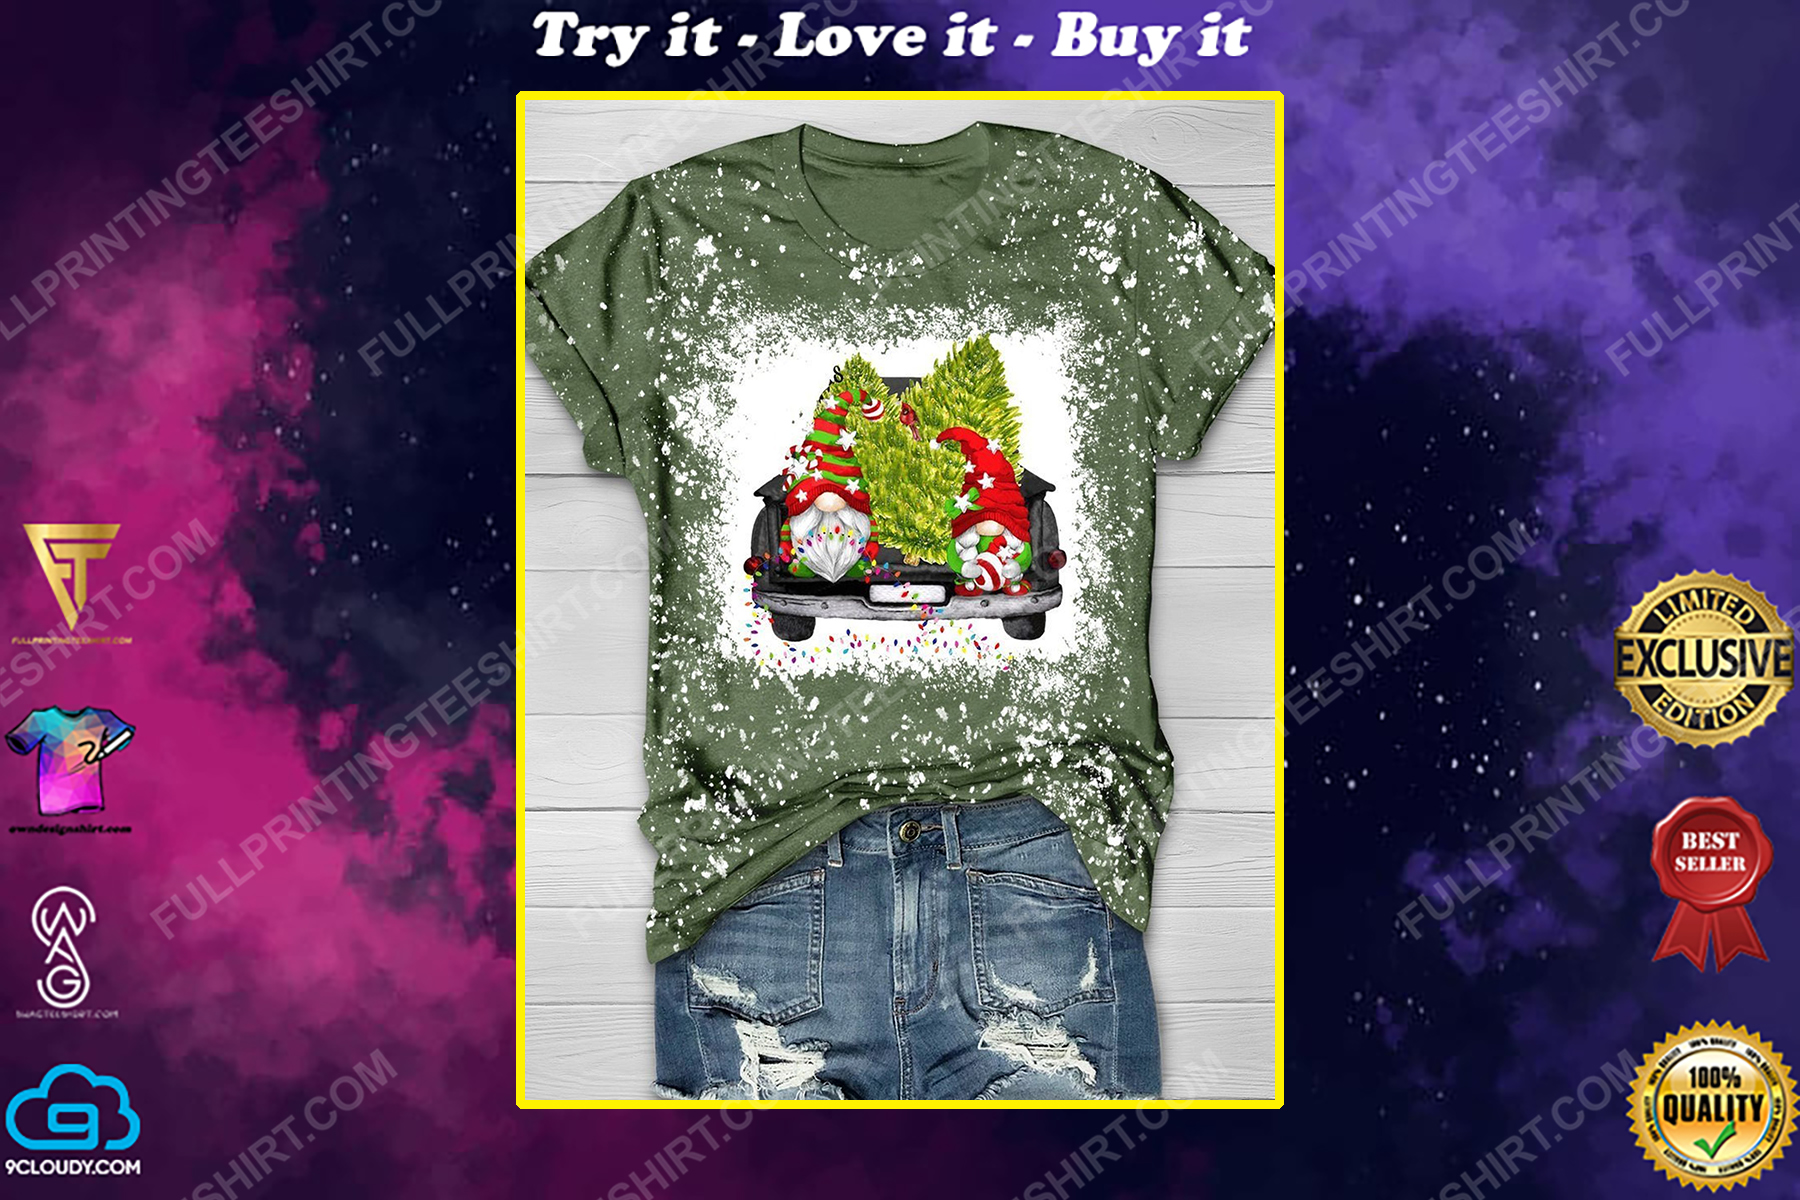 Christmas tree and gnomes vintage full print shirt